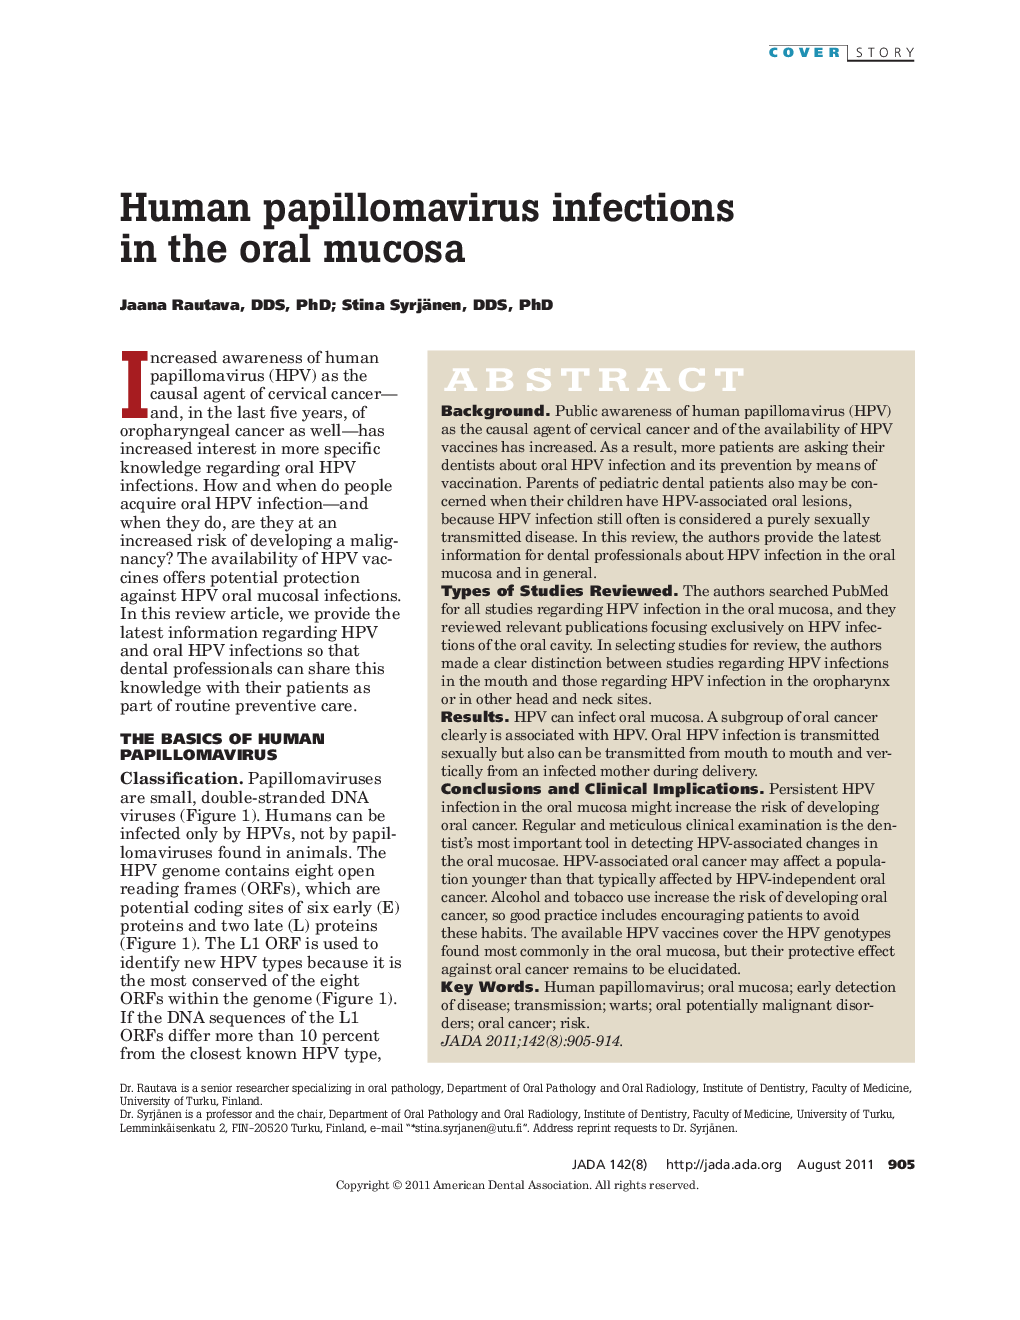 Human papillomavirus infections in the oral mucosa